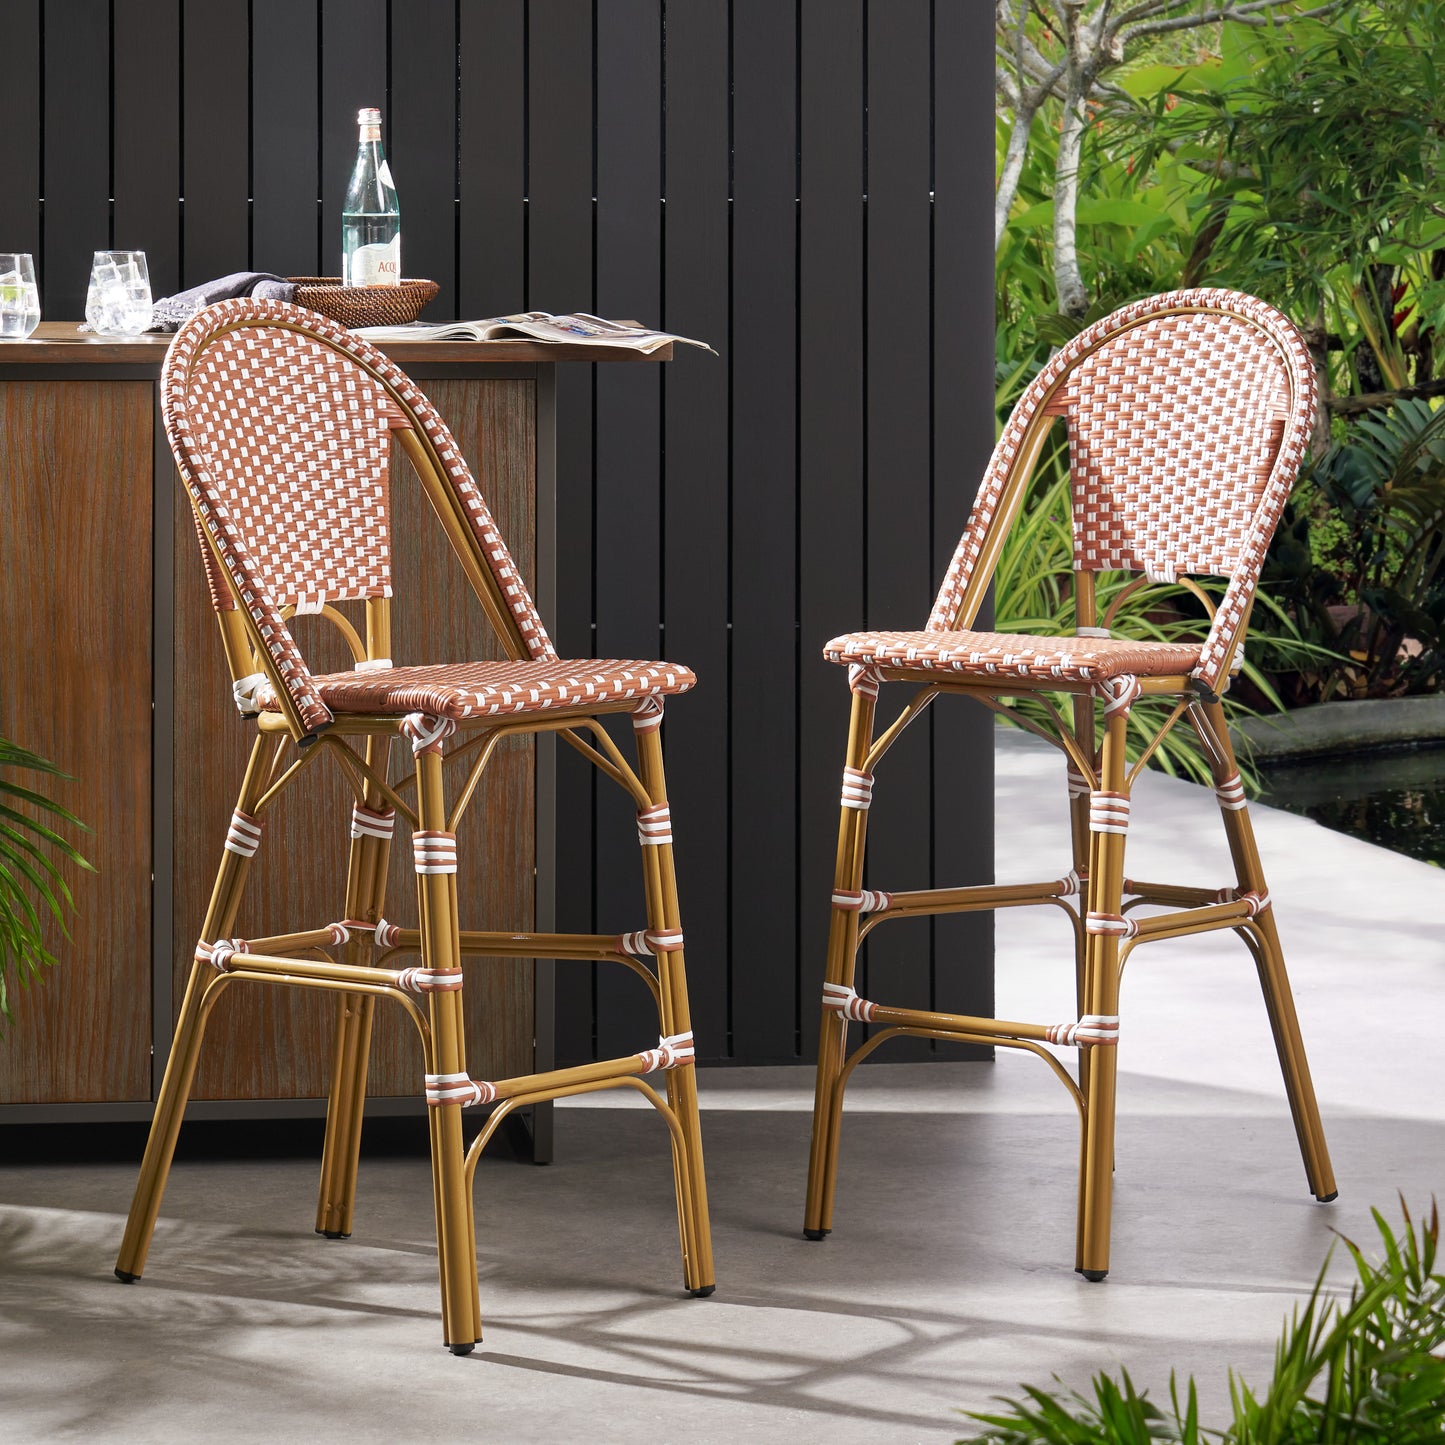 Grelton Outdoor Aluminum French Barstools, Set of 2